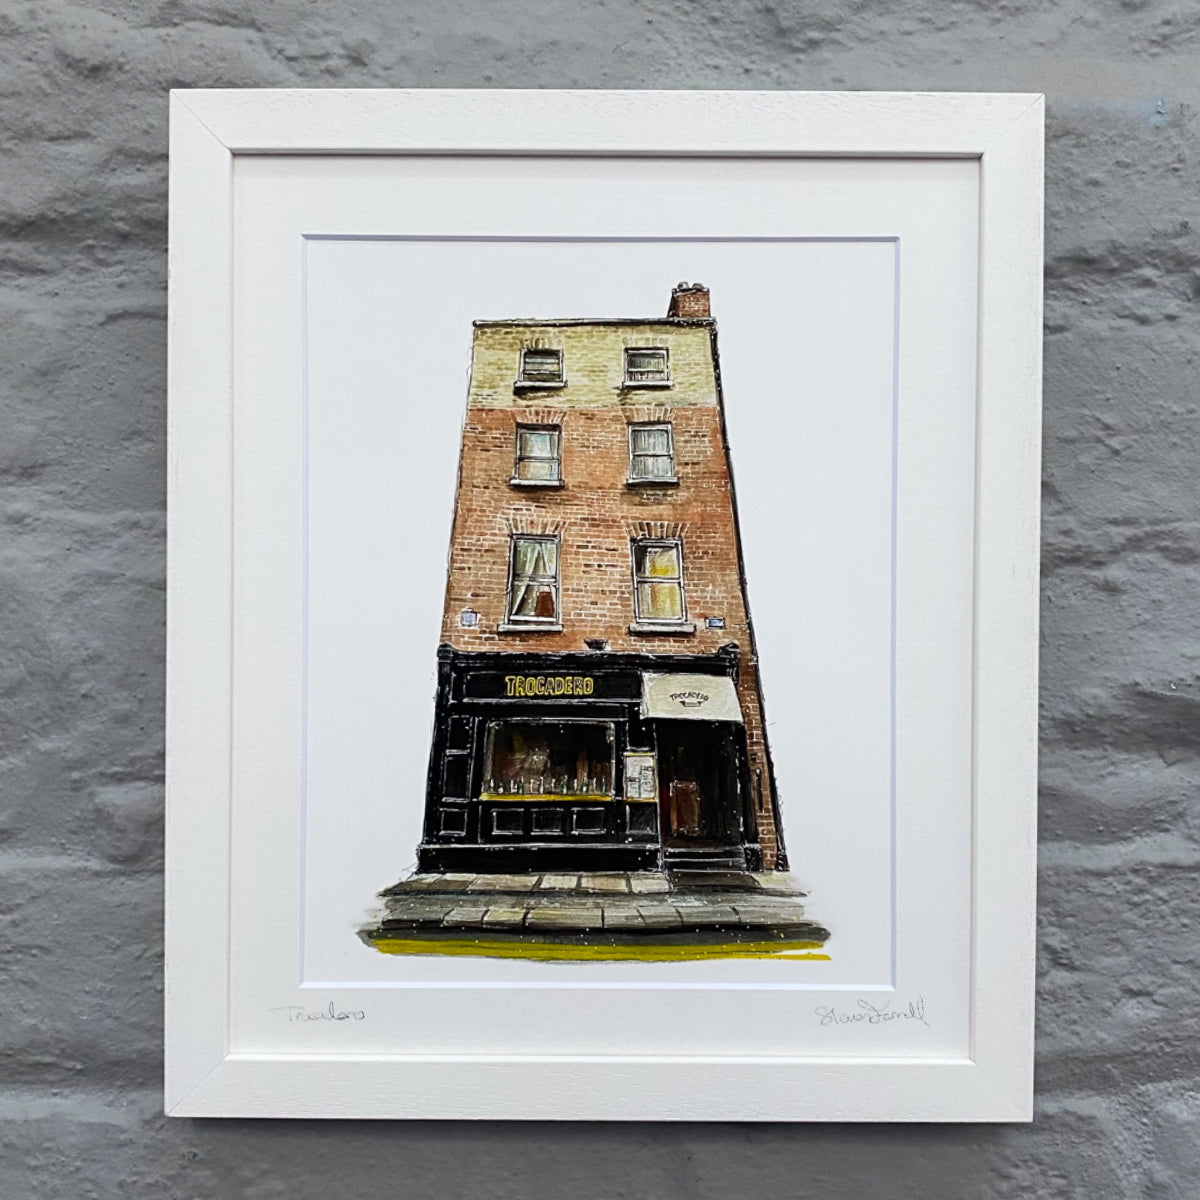 Framed-print-of-Trocadero-restaurant-Dublin